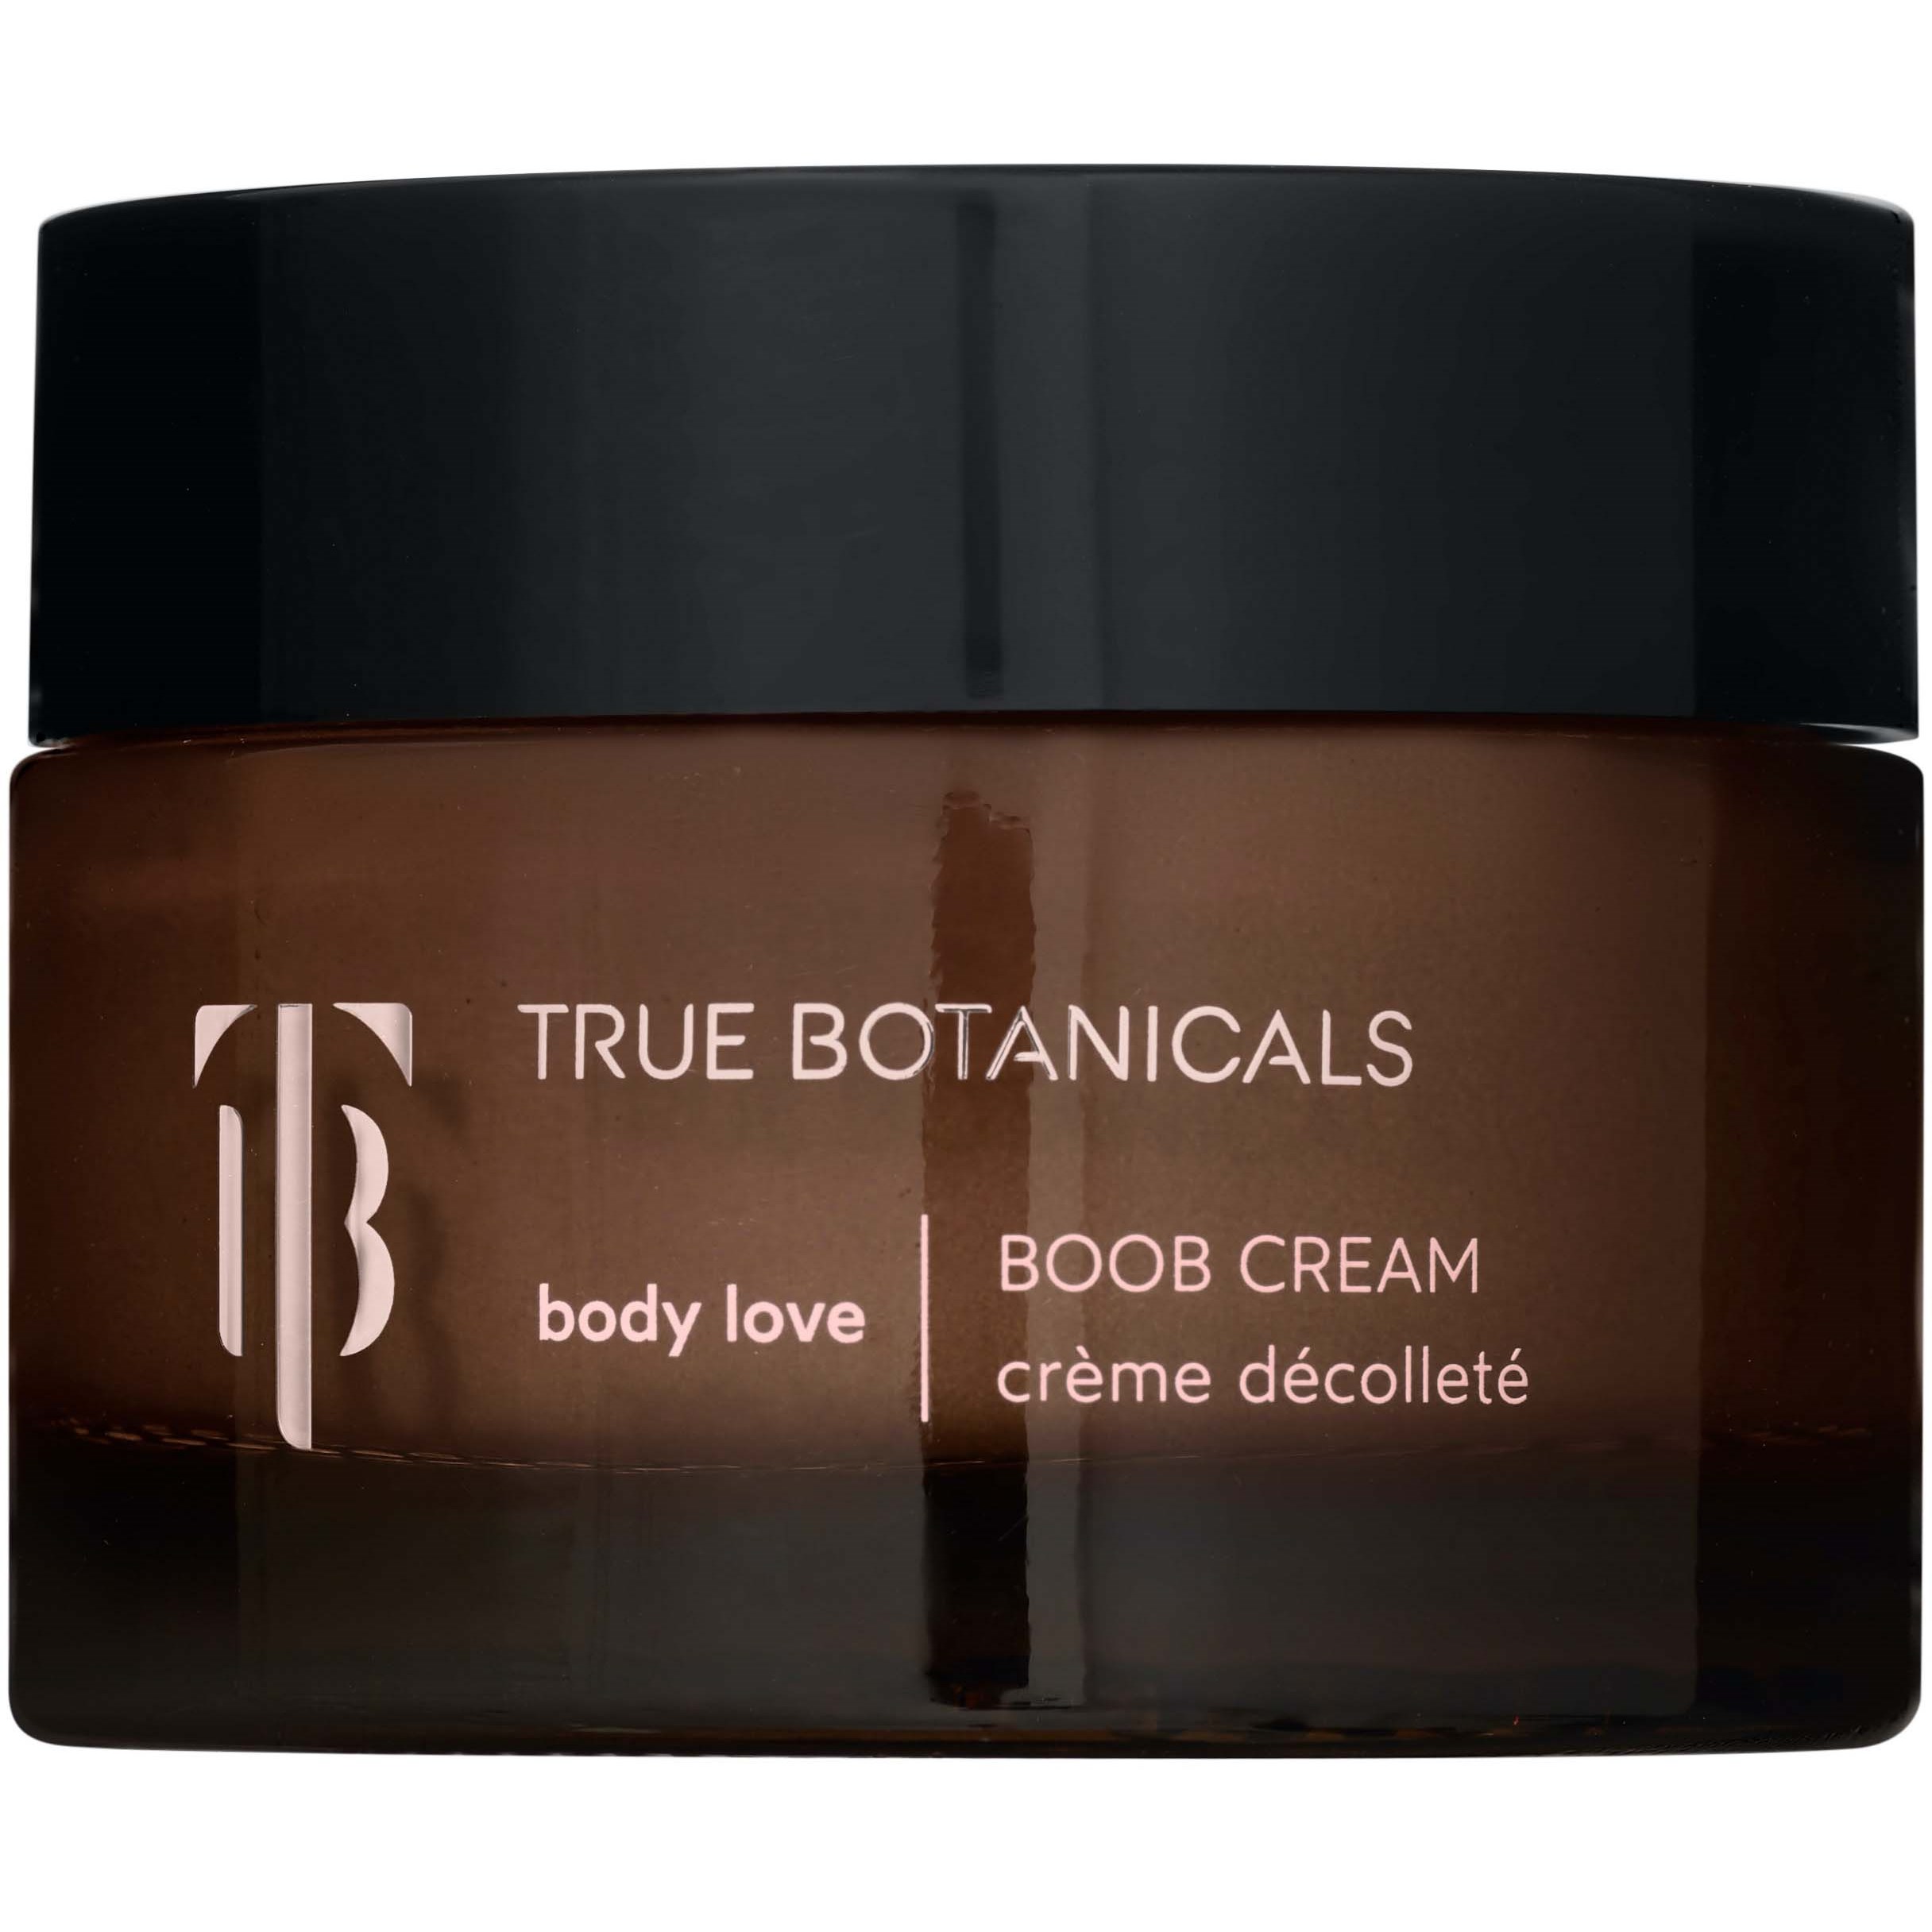 True Botanicals Body Love Boob Cream 50 ml